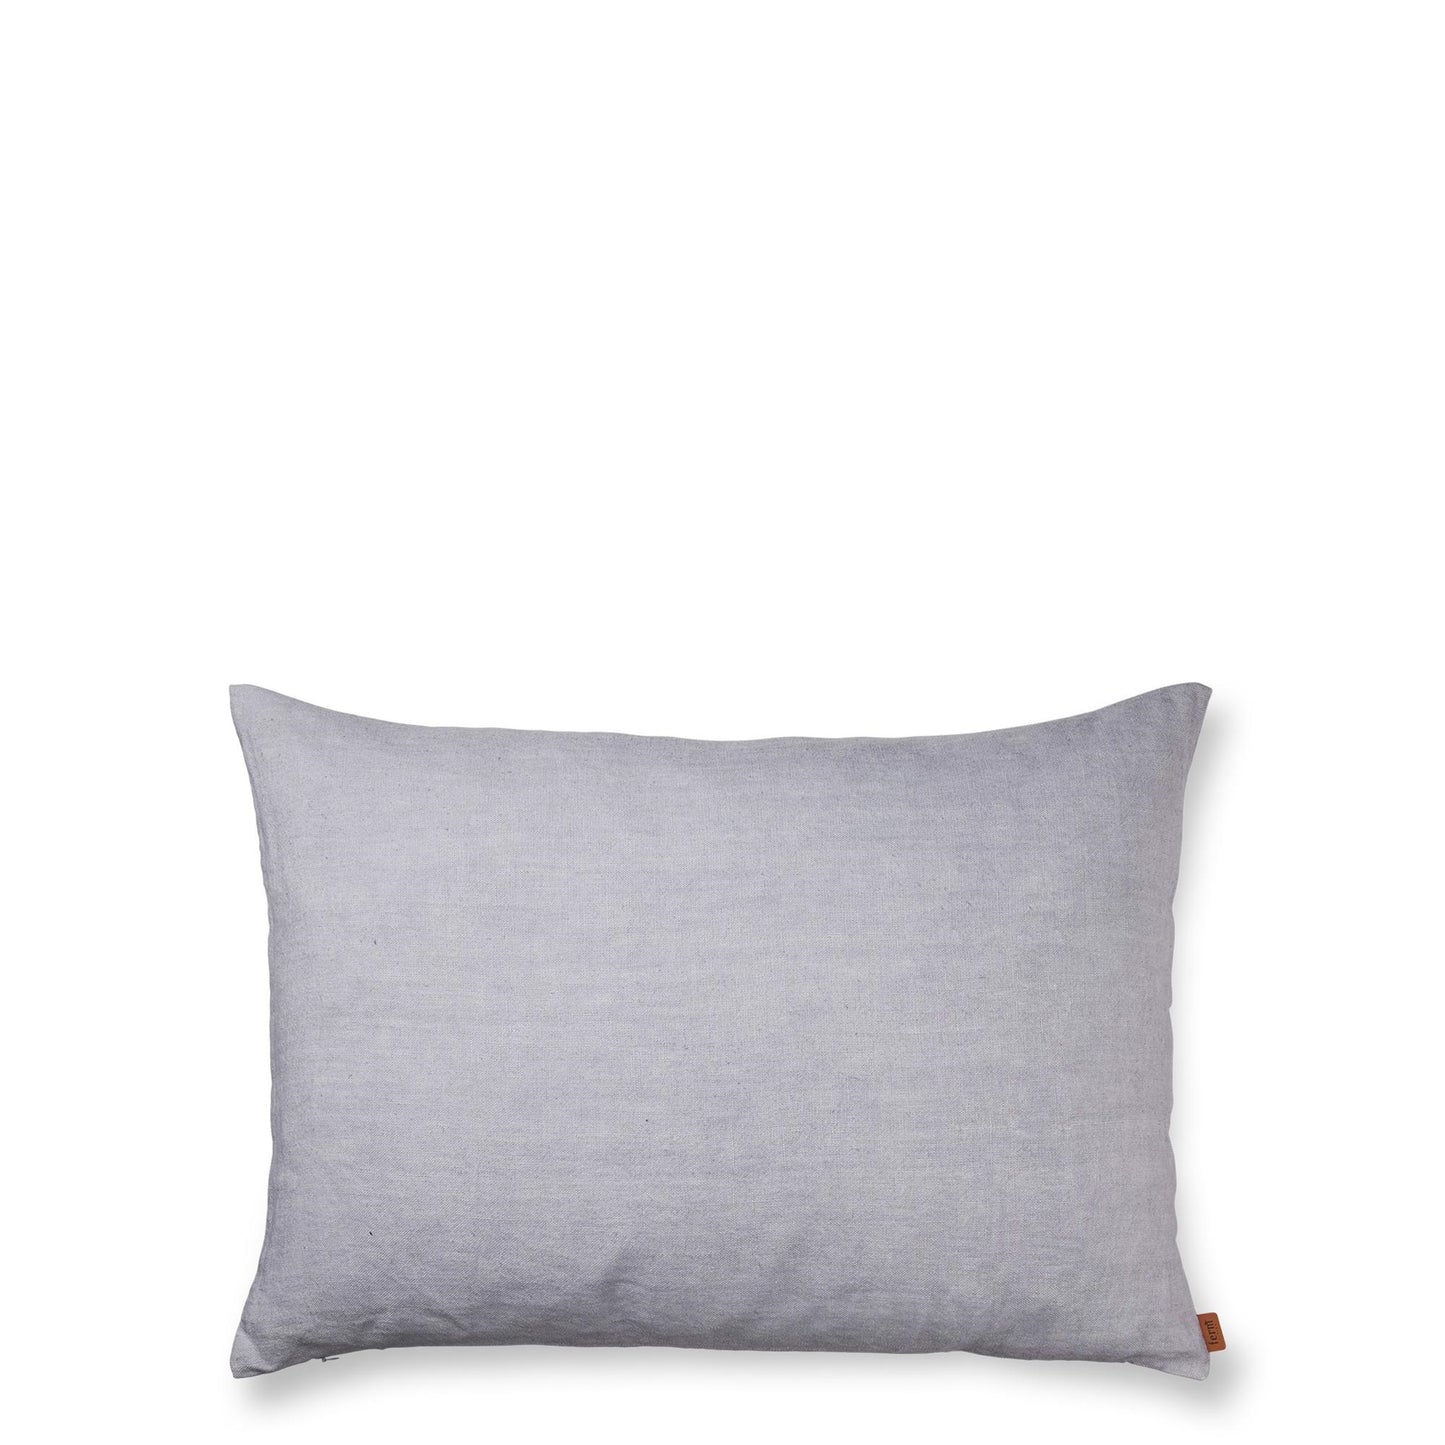 Heavy Linen Pillow Large by Ferm Living #Cashmere